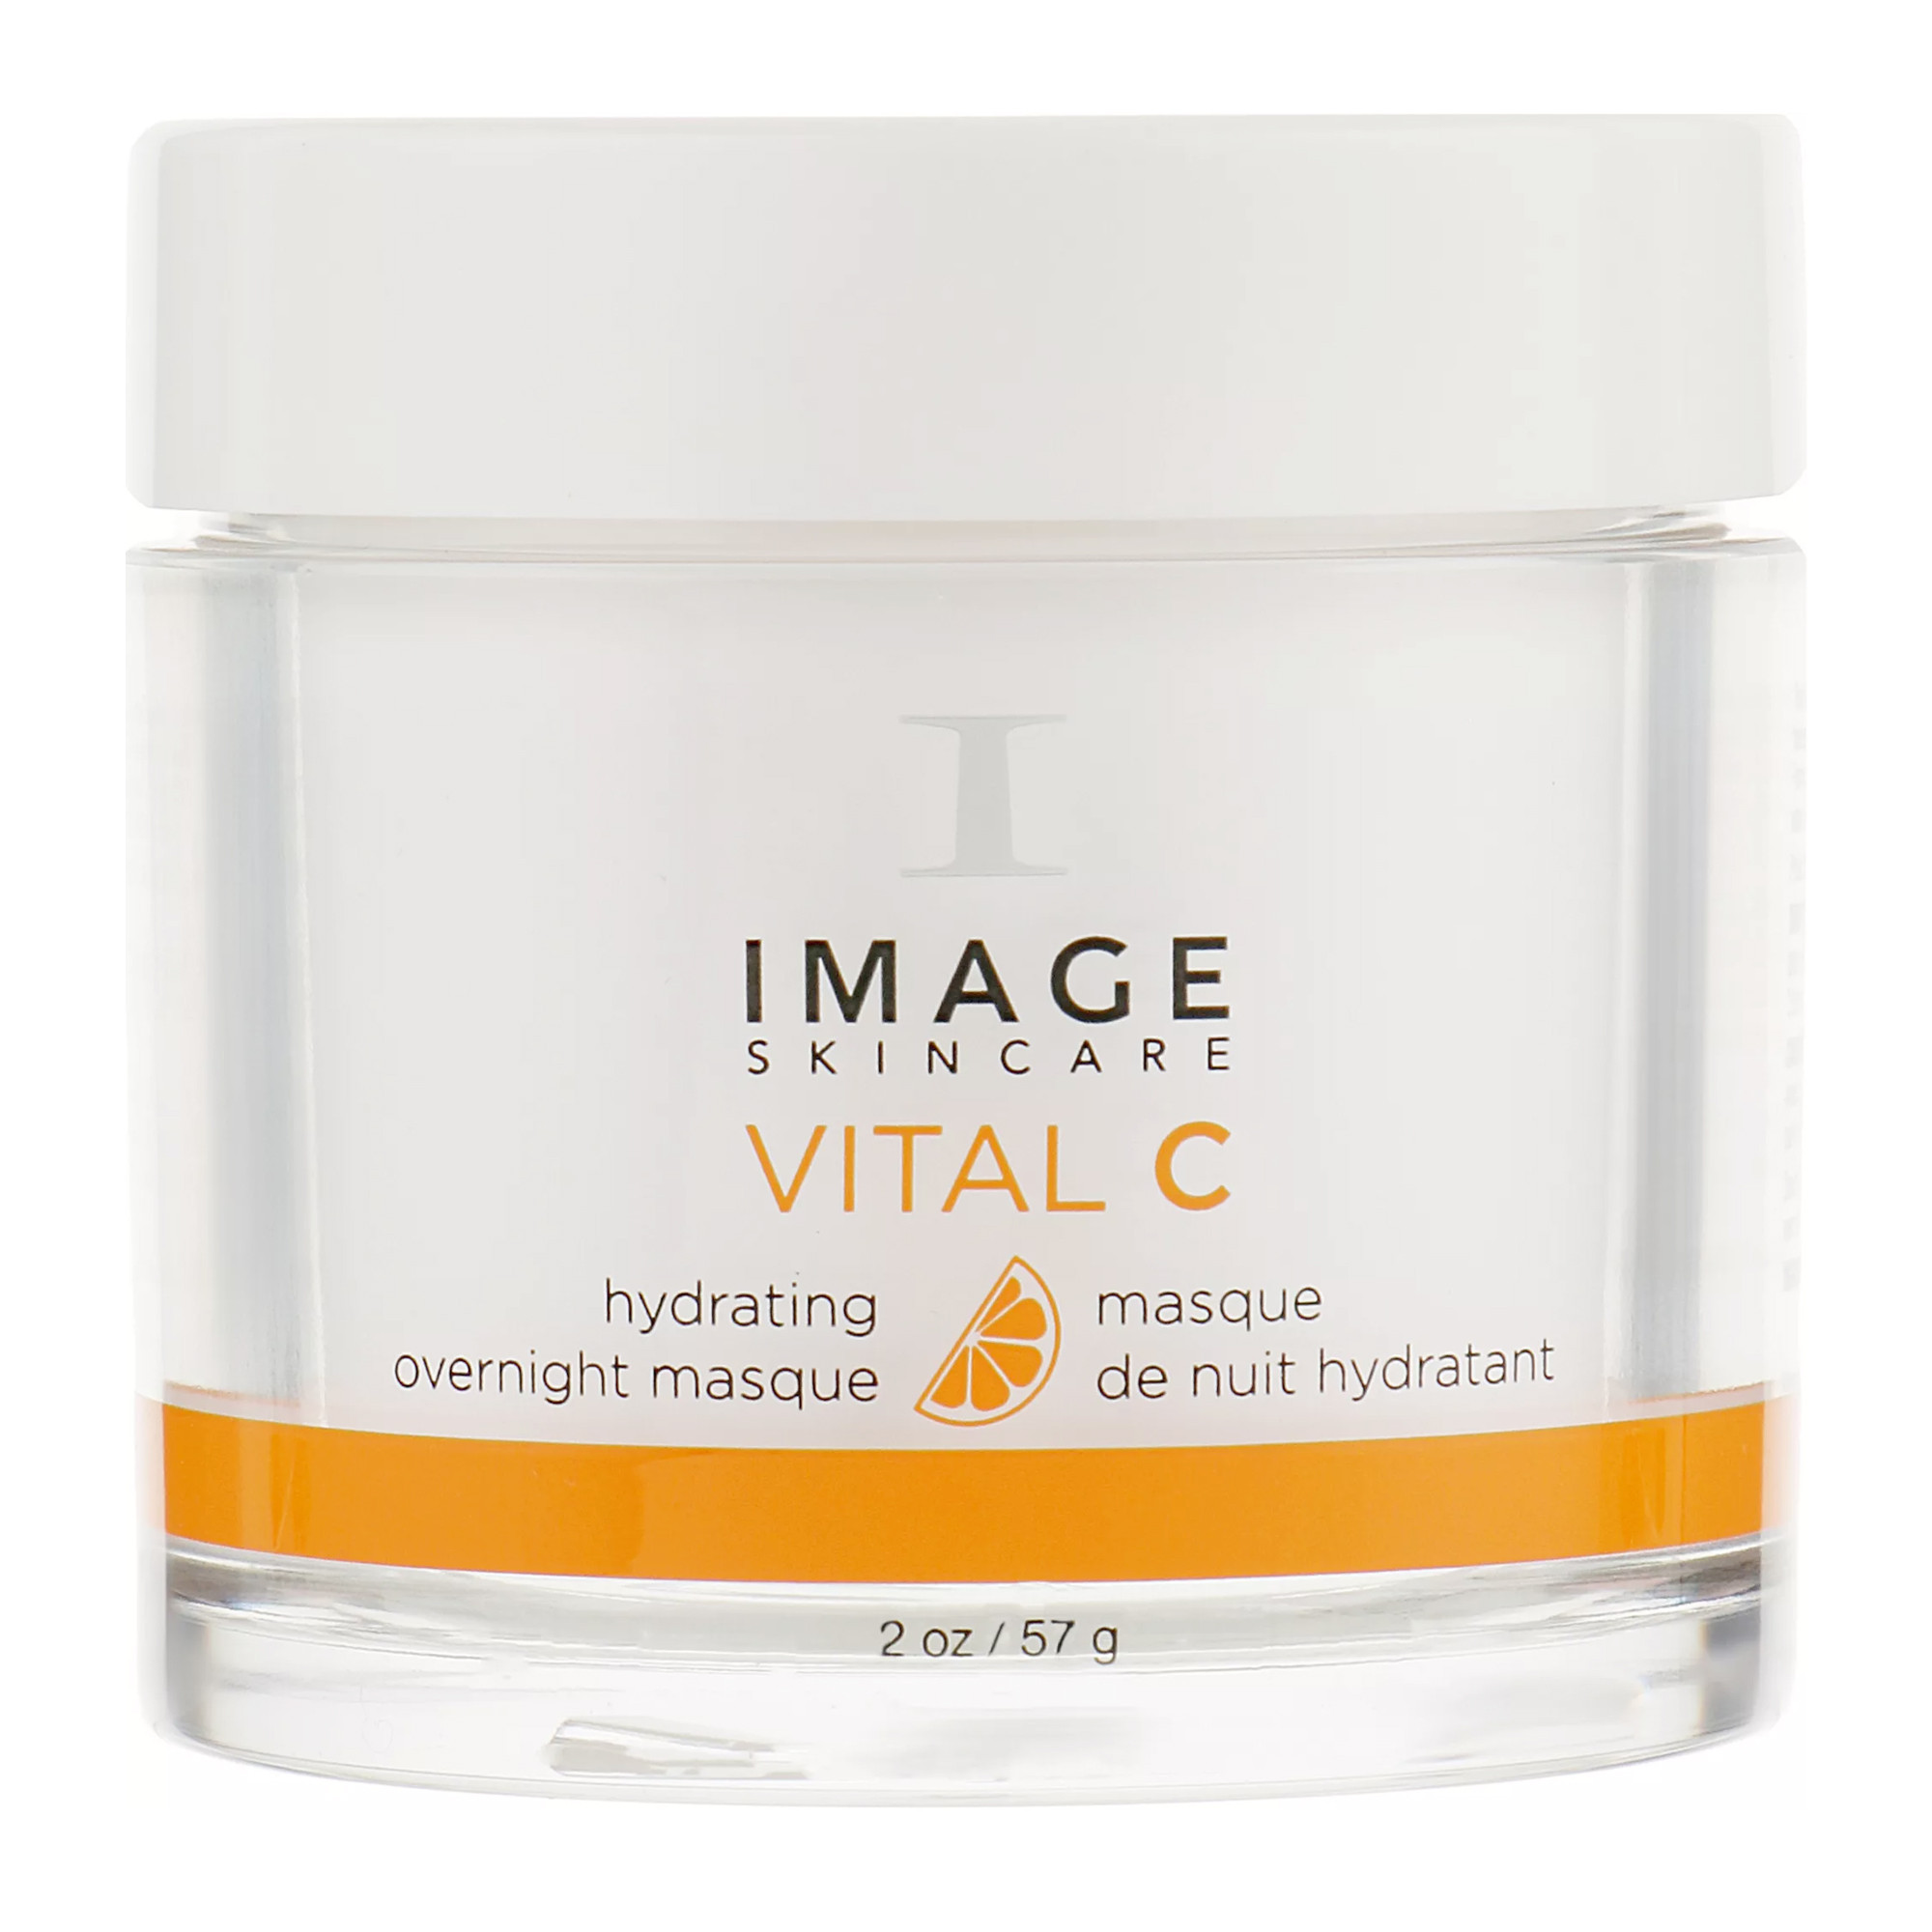 Image Skincare Vital C Hydrating Overnight Masque Нічна зволожуюча маска